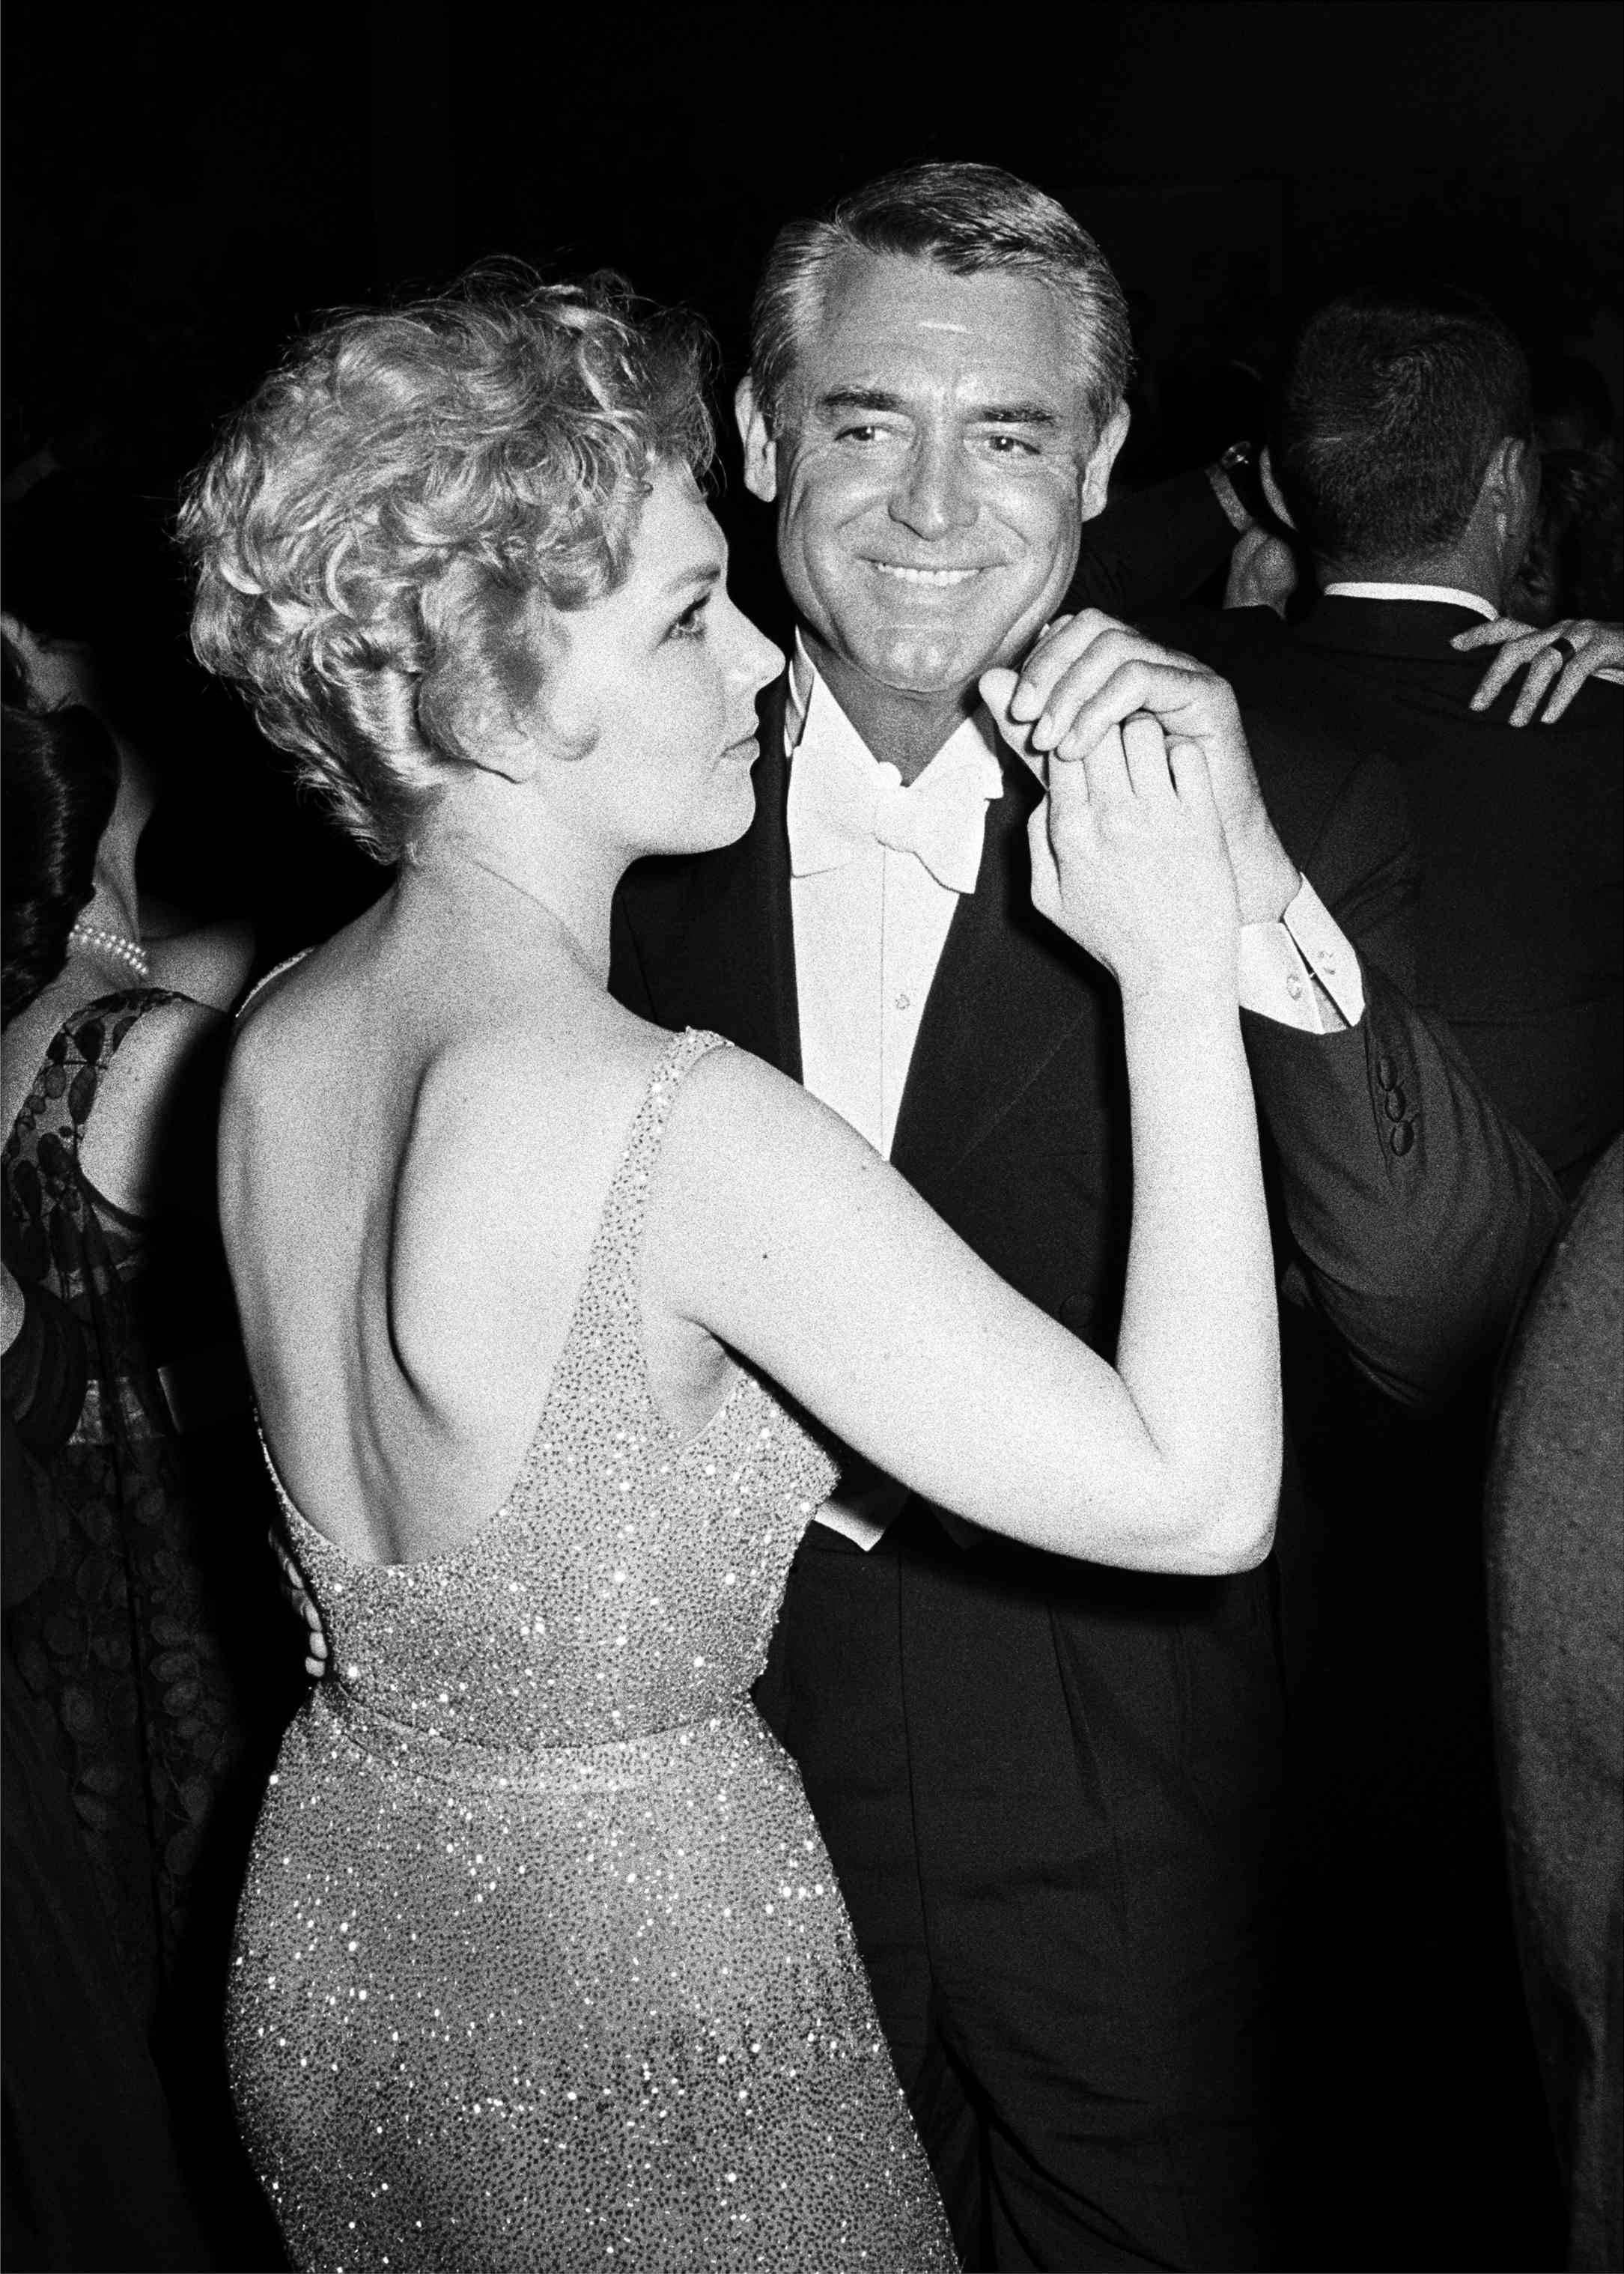 Frank Worth Portrait Photograph - Cary Grant and Kim Novak Dancing Fine Art Print